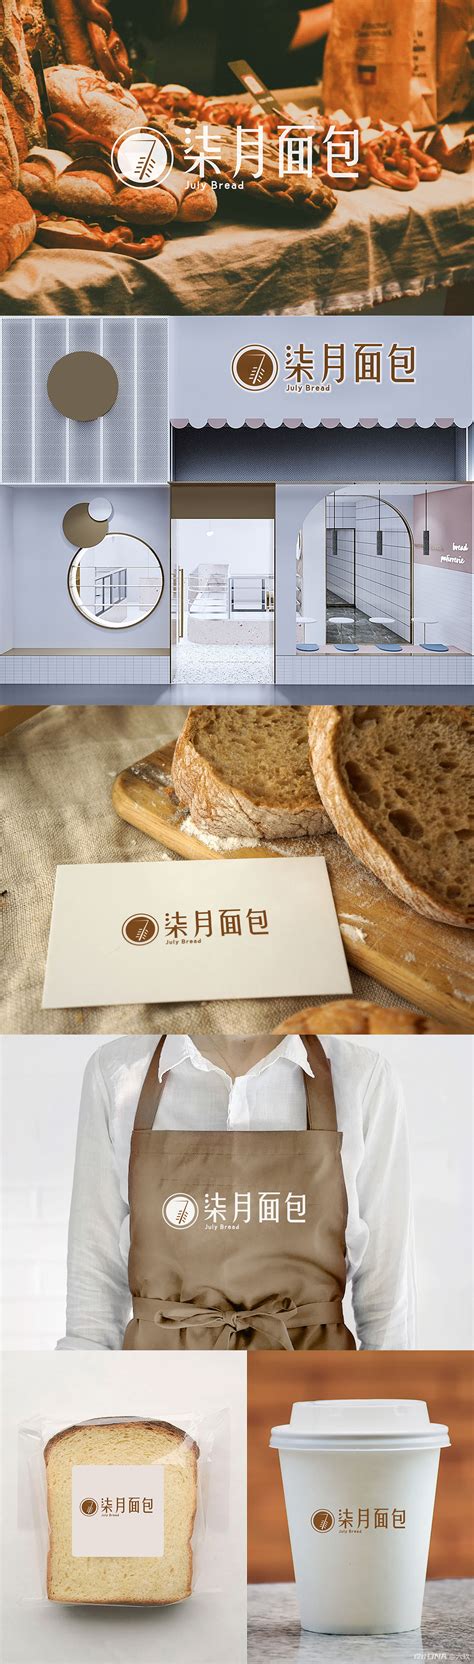 MÒLT面包店品牌VI设计 - 设计之家